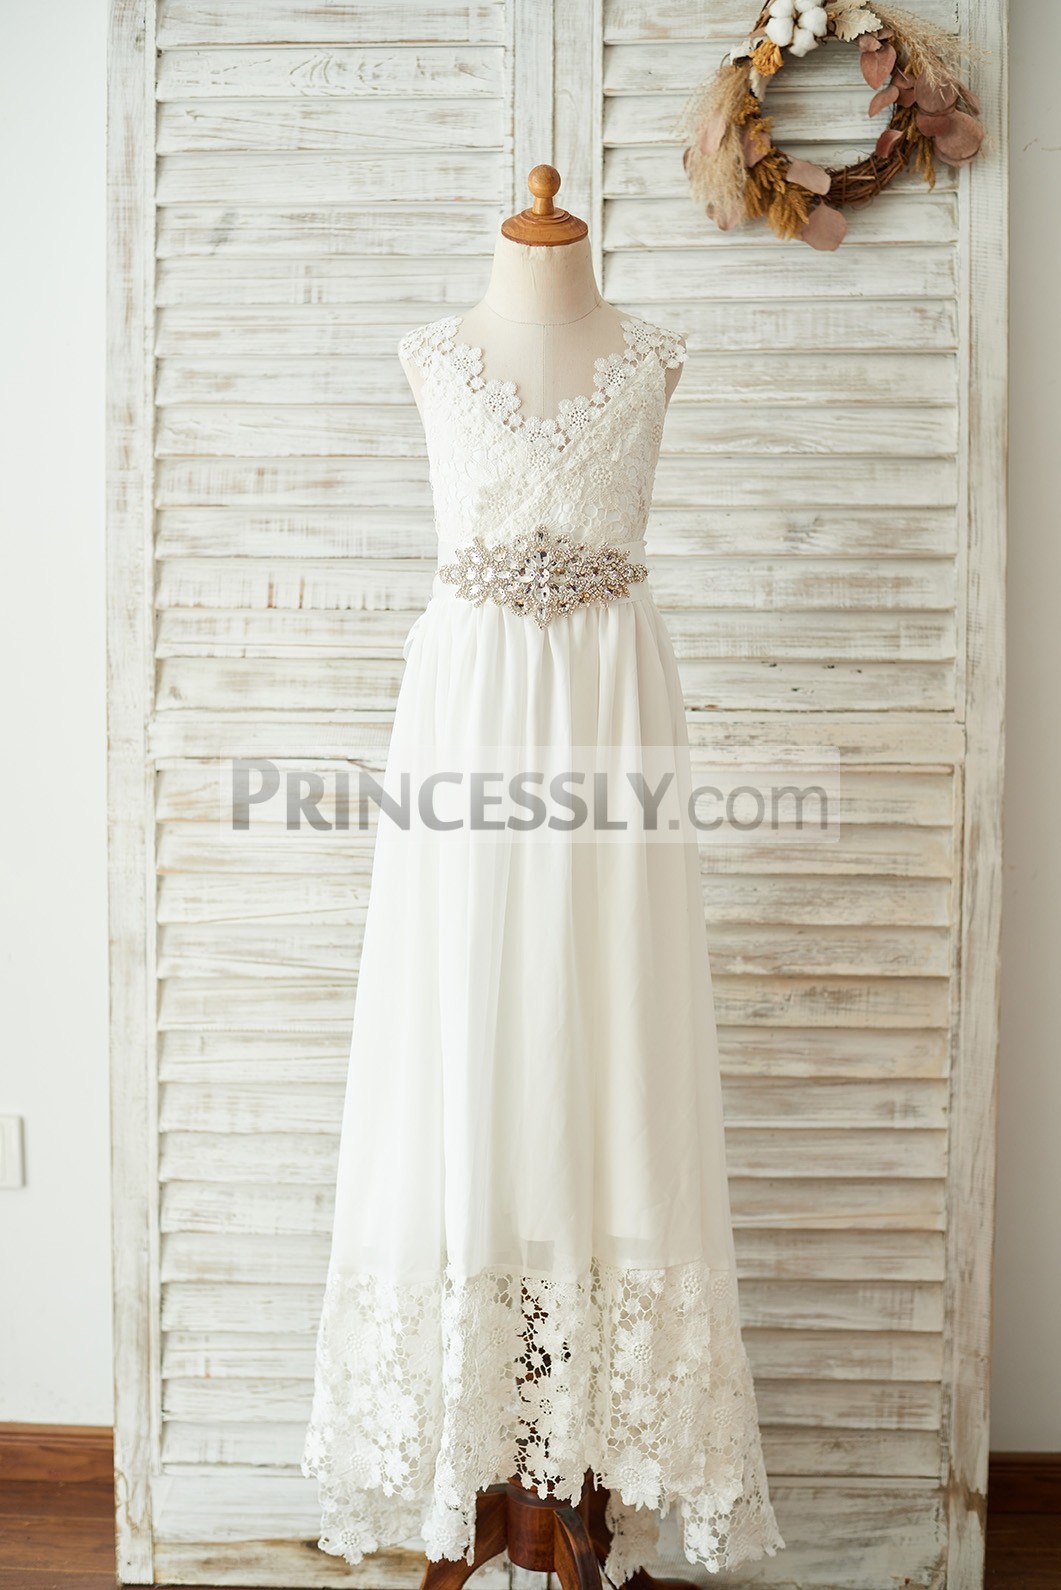 Princessly.com-K1003680-Boho Beach Lace Chiffon Backless Long Wedding Flower Girl Dress with Belt-31